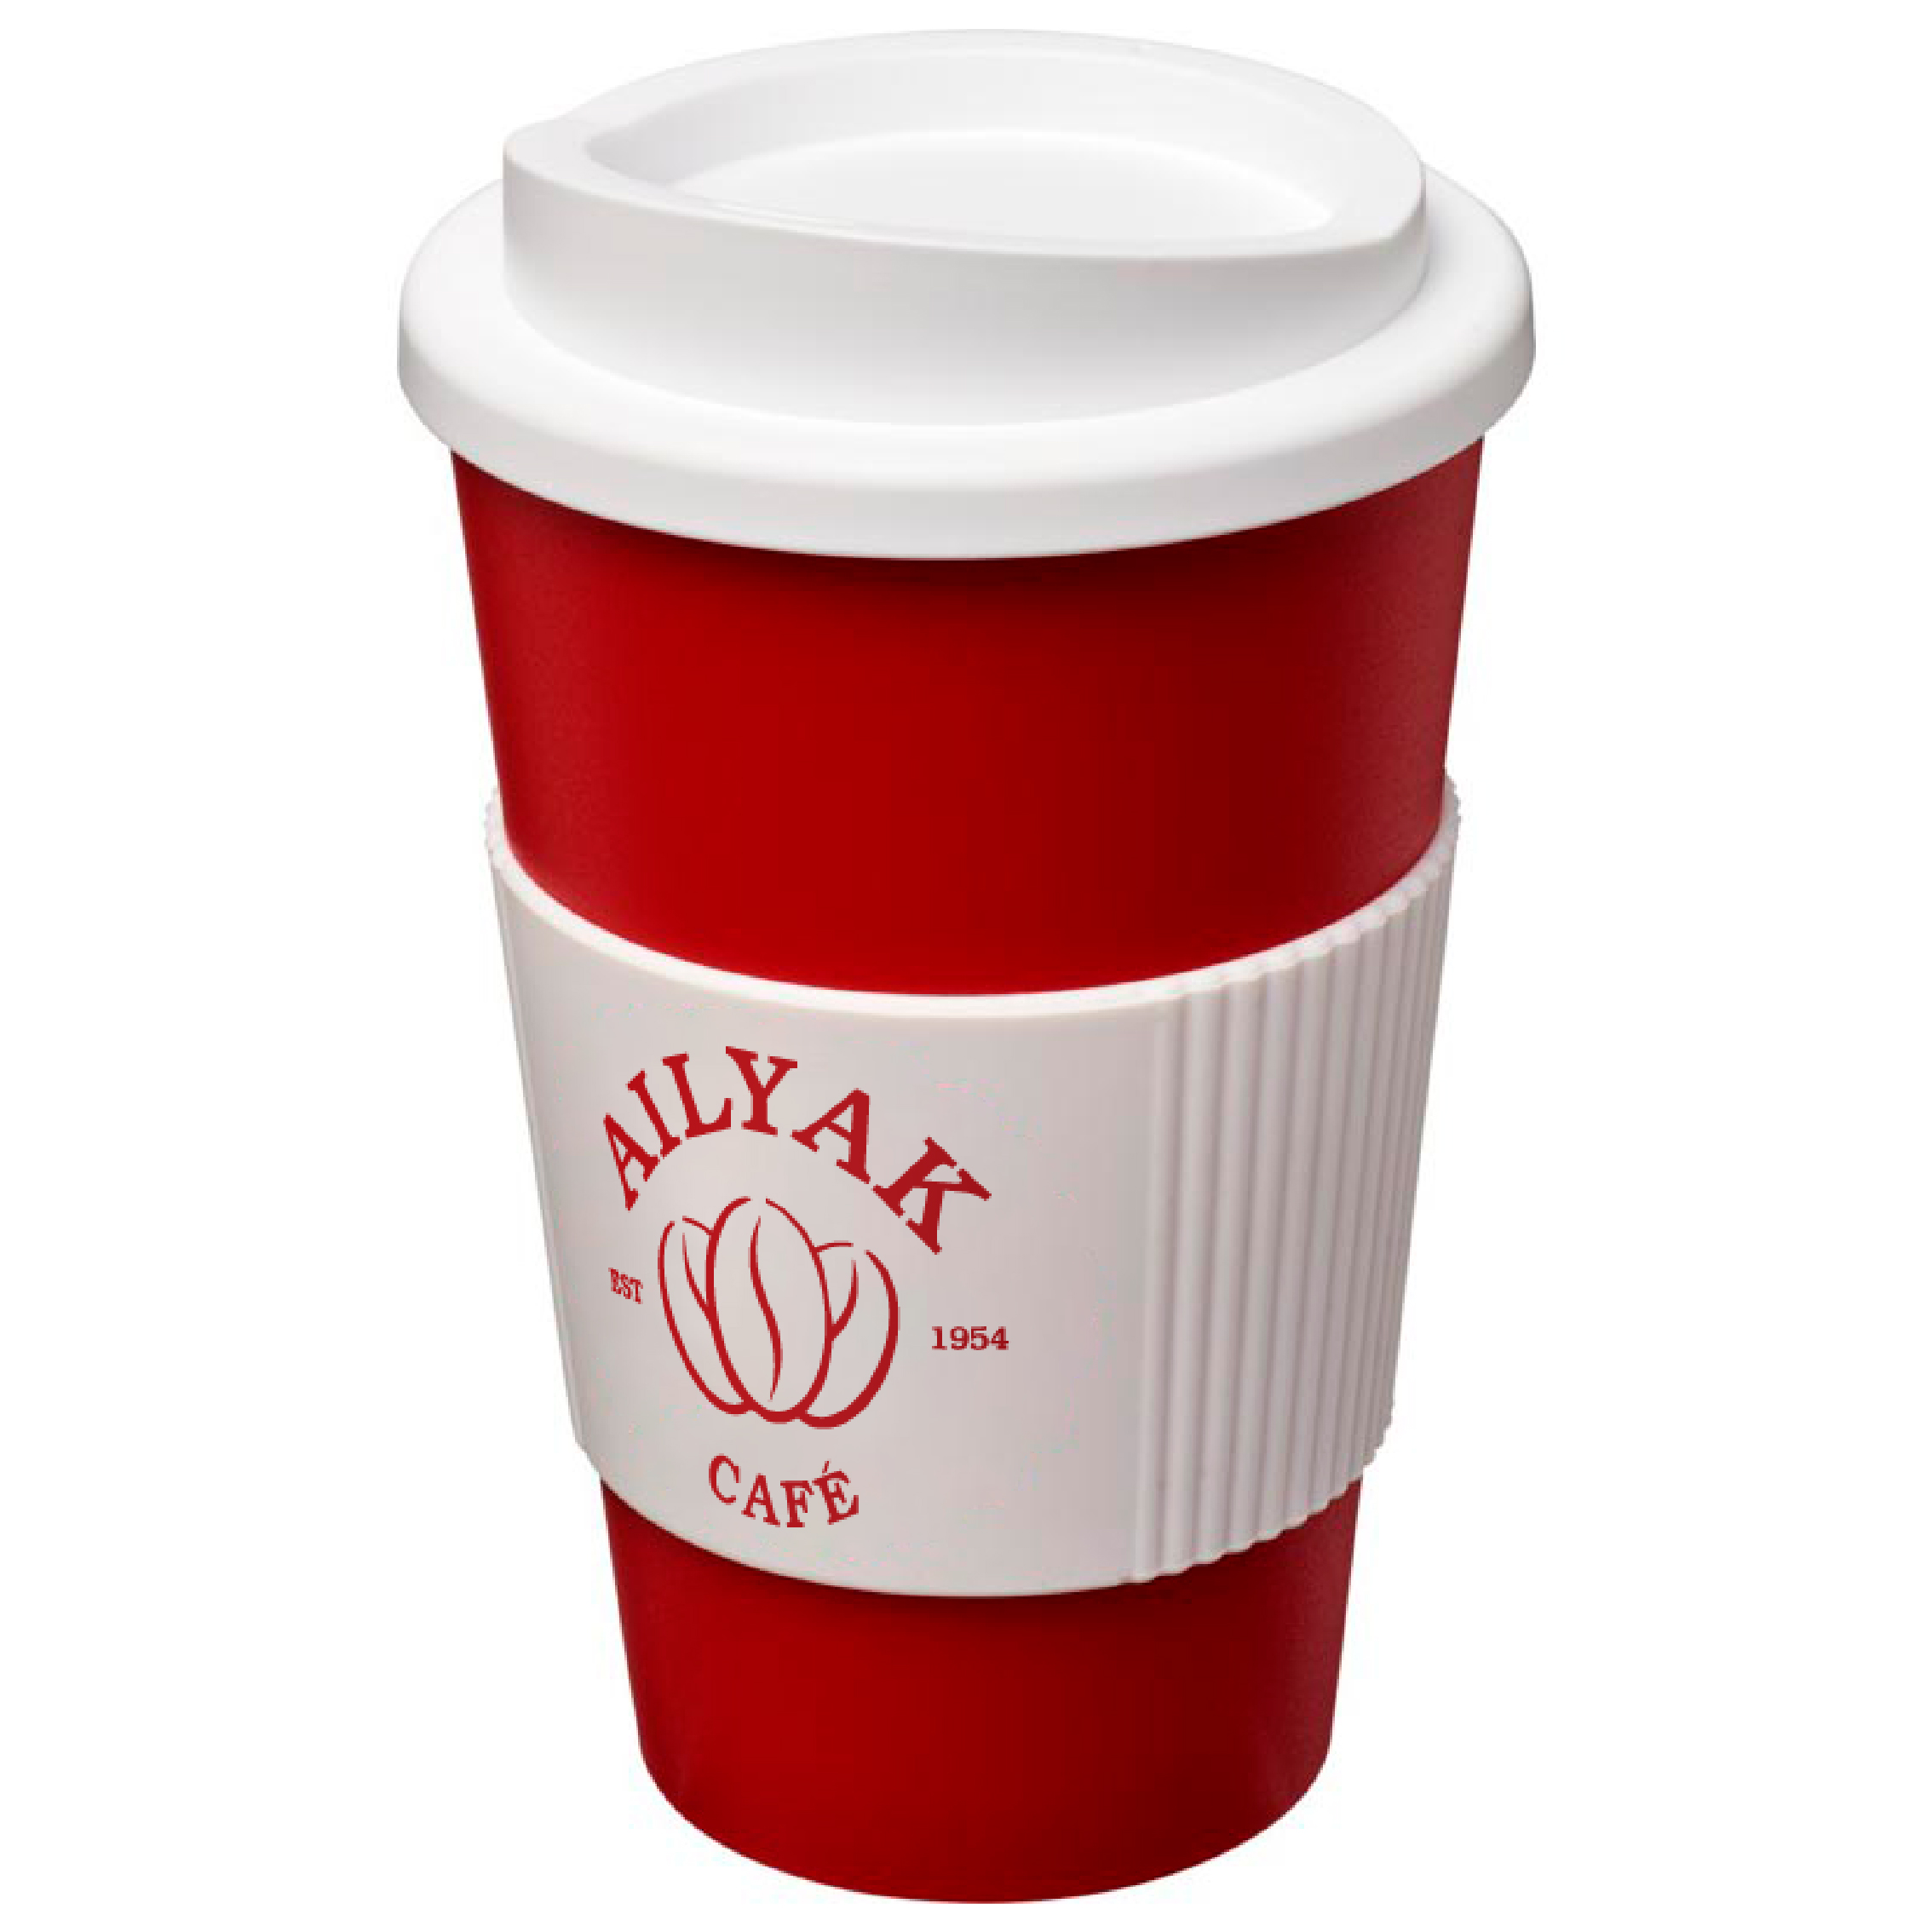 I love this cup display ! - Picture of Starbucks, Rio Grande - Tripadvisor